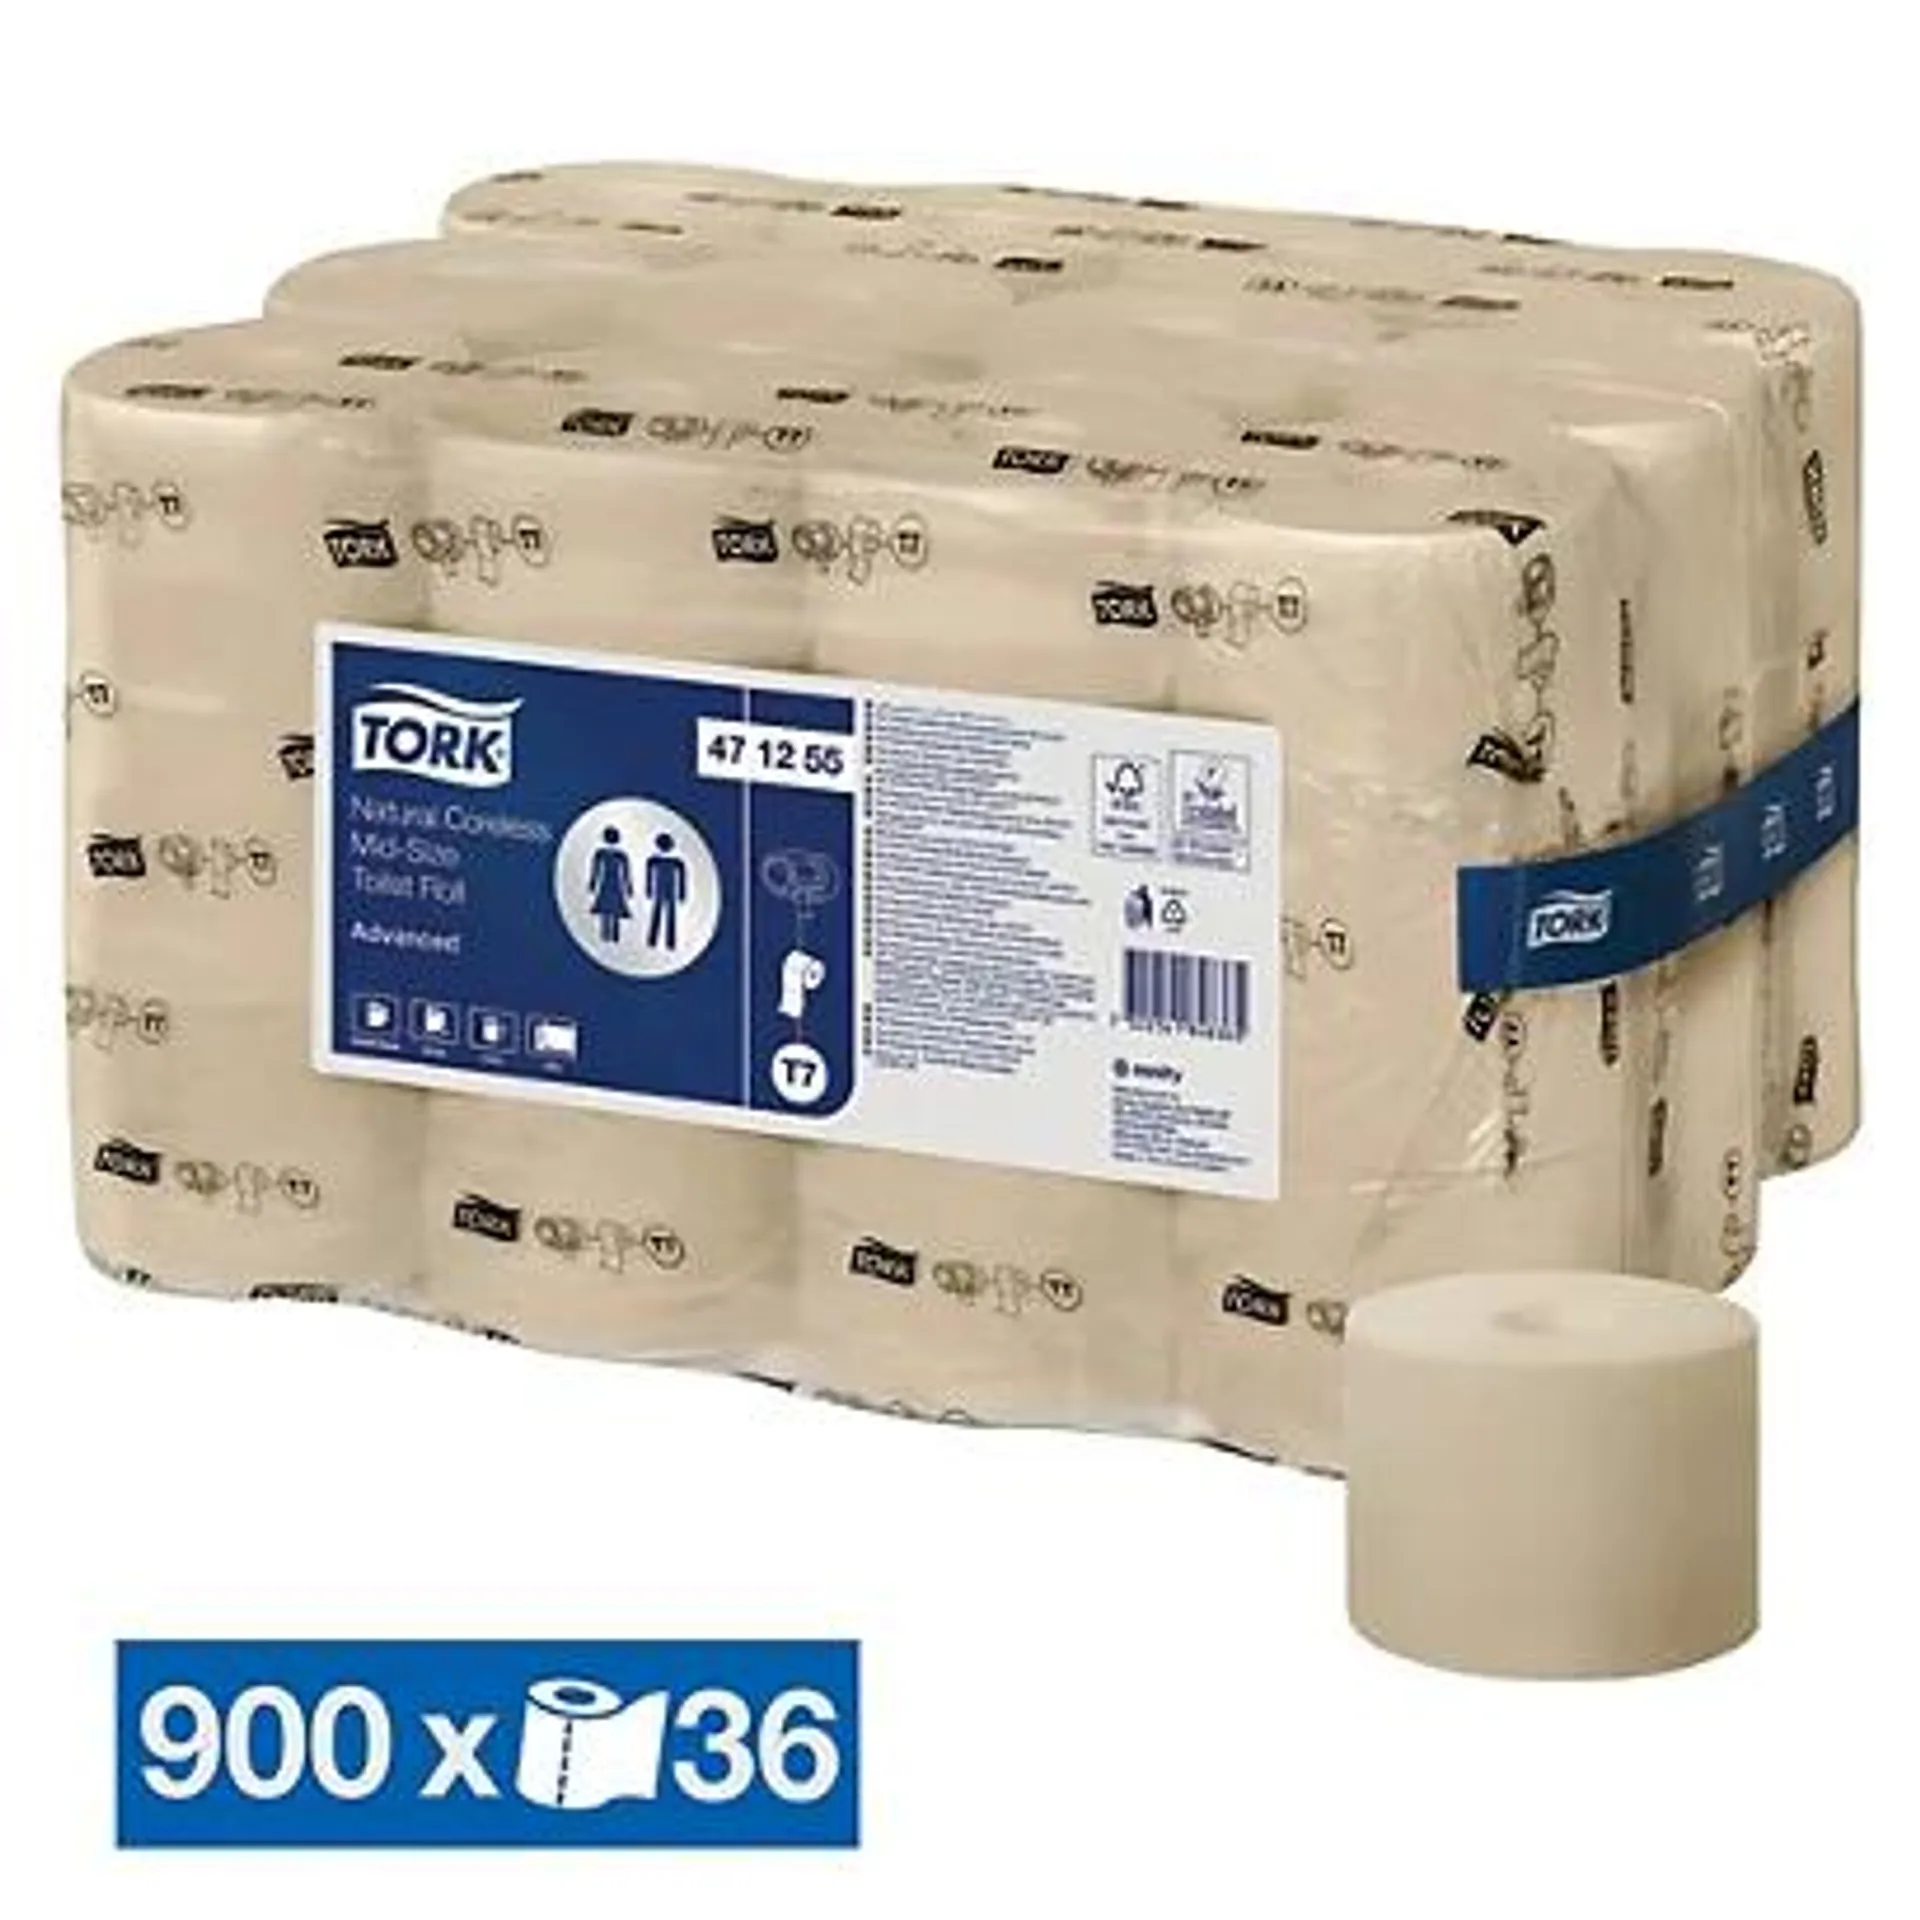 Toiletpapier Tork Natural Mid-size Advanced T7 2-laags, set van 36 rollen